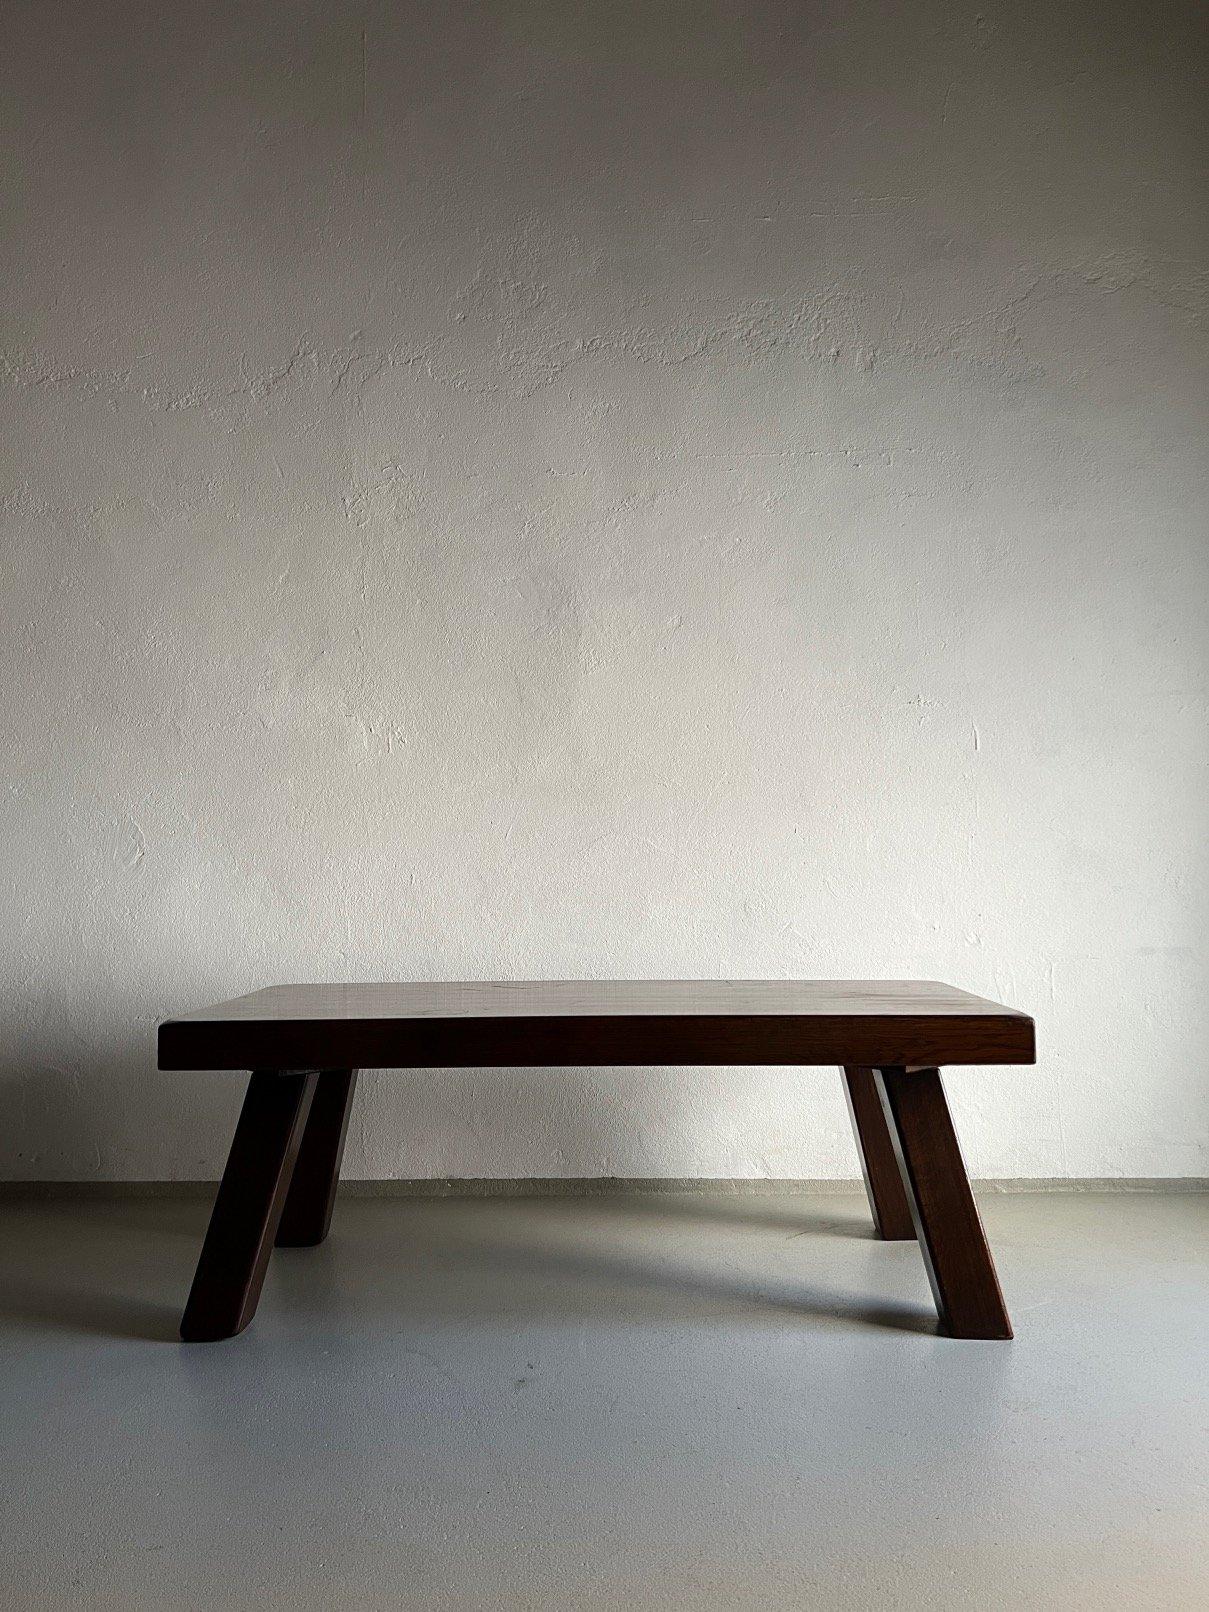 Vintage brutalist coffee table made of solid oak.

